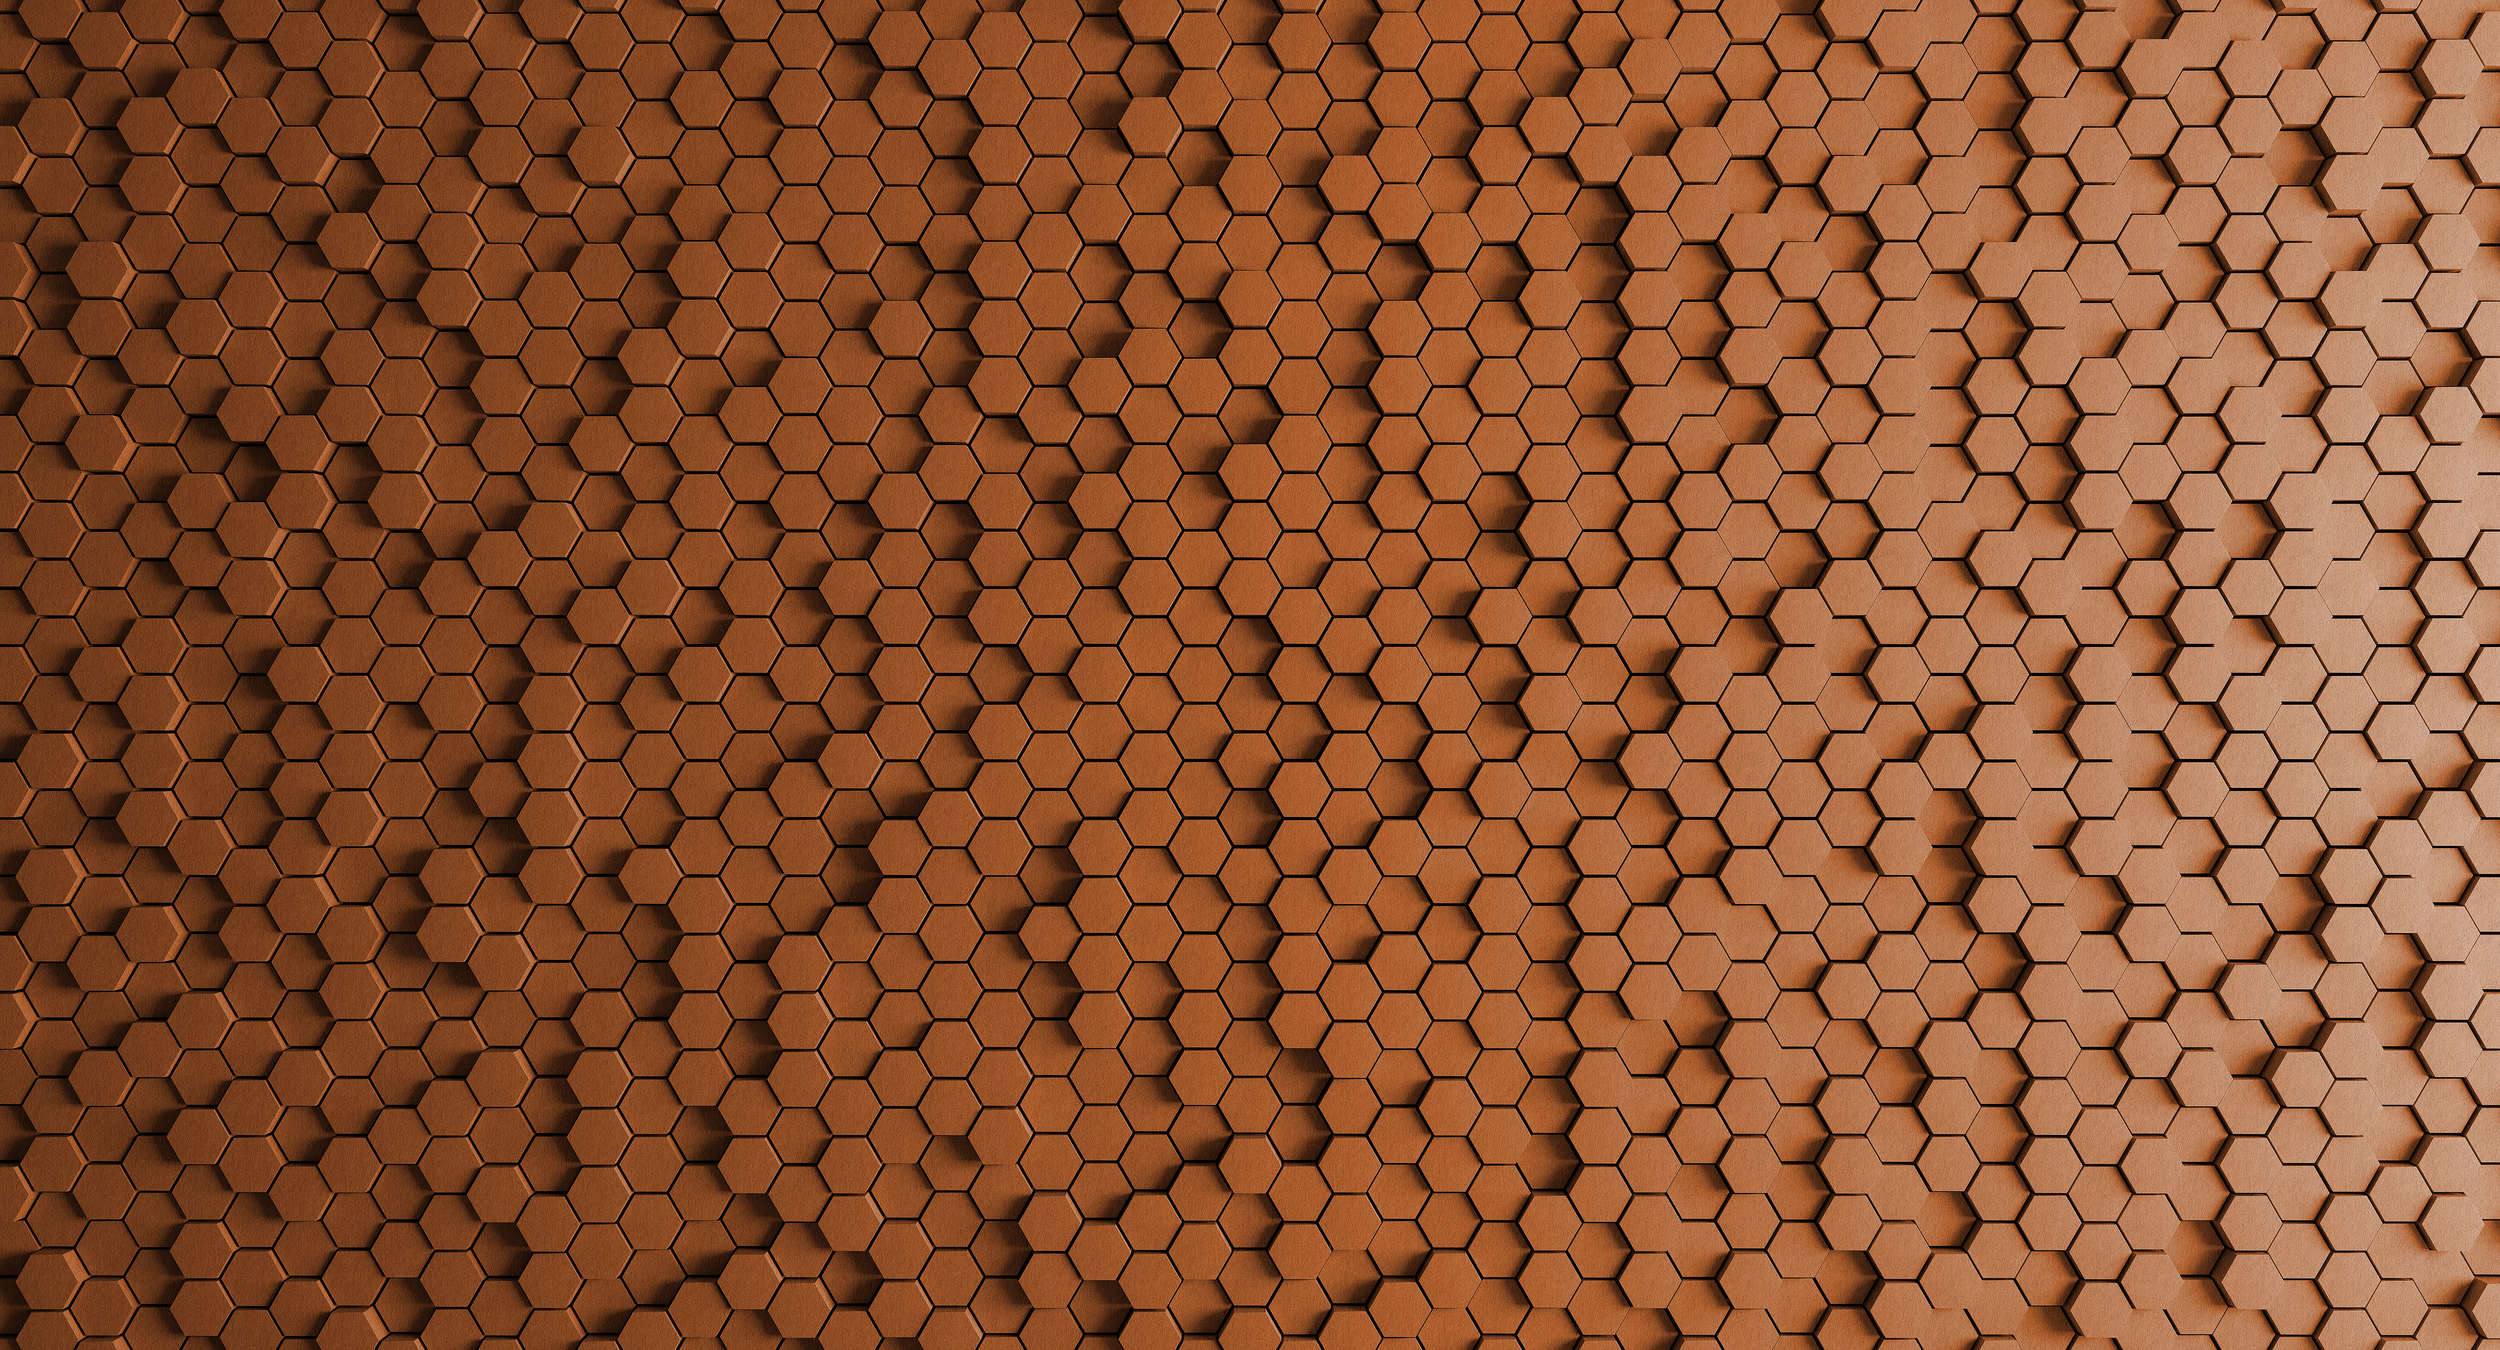             Honeycomb 2 - Carta da parati 3D con disegno a nido d'ape arancione - struttura in feltro - rame, arancione | perla liscia in pile
        